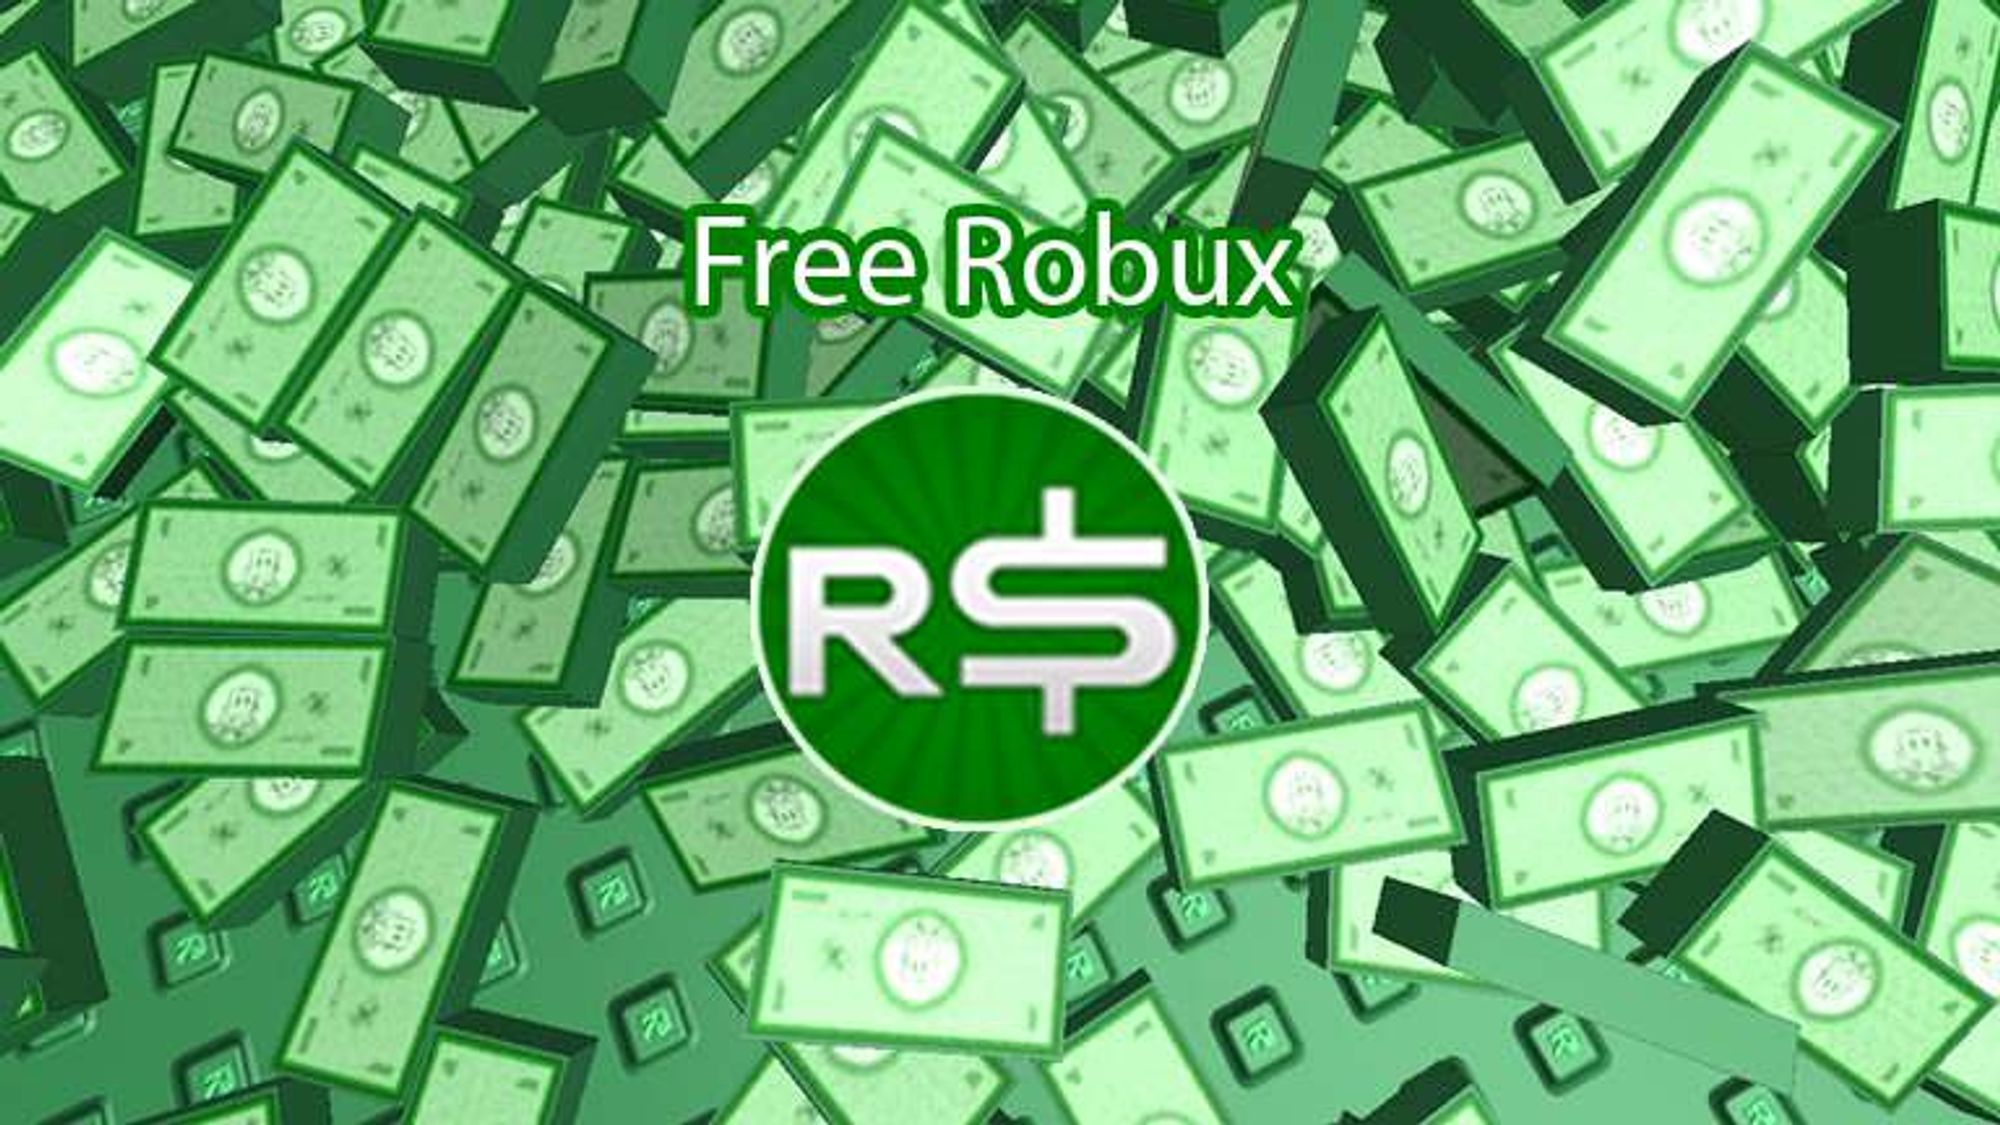 Roblox Robux Hack Free Robux Generator No Human Verification Or Survey - robux hack no verification or survey 2019